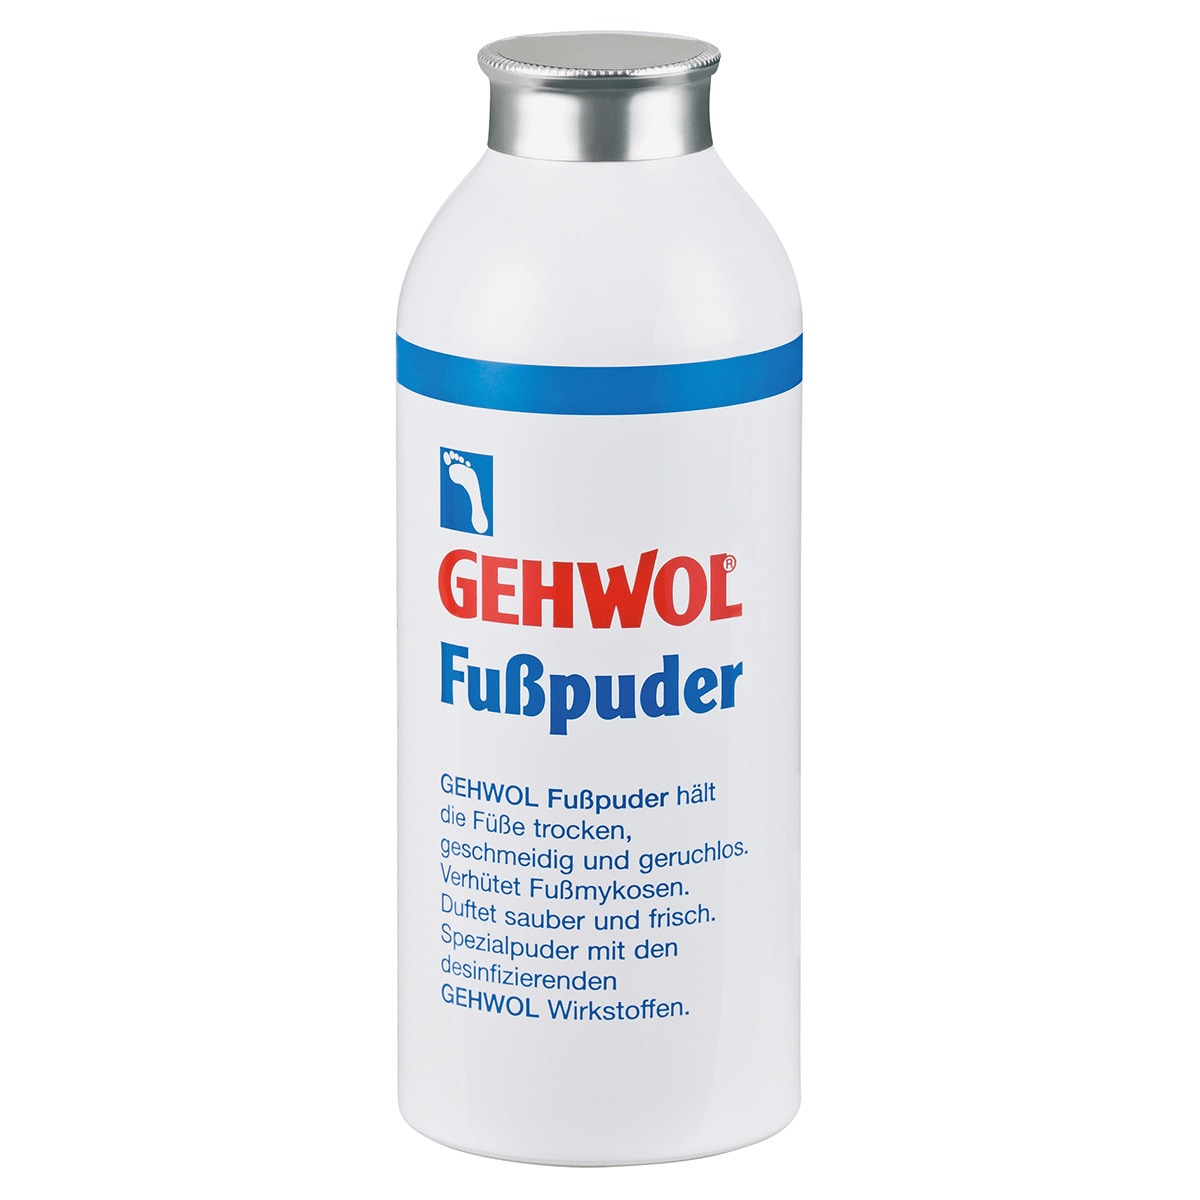 Gehwol Foot Powder Spreader